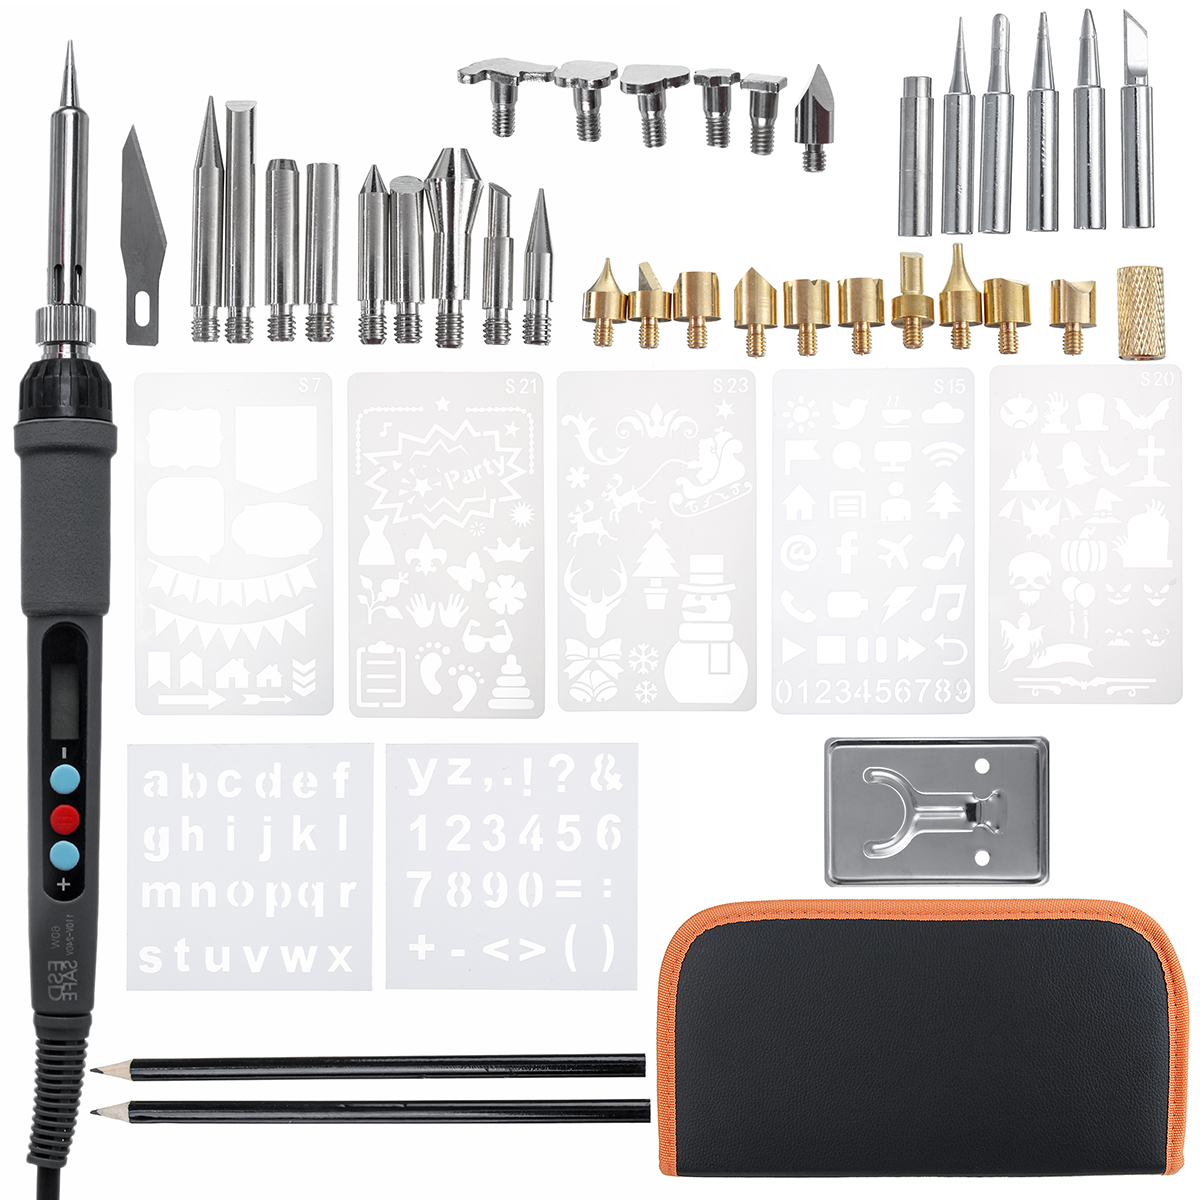 42Pcs-60W-Wood-Burning-Pen-Tool-Soldering-Stencil-Iron-Craft-LCD-Pyrography-Soldering-Tools-Kit-1632145-1